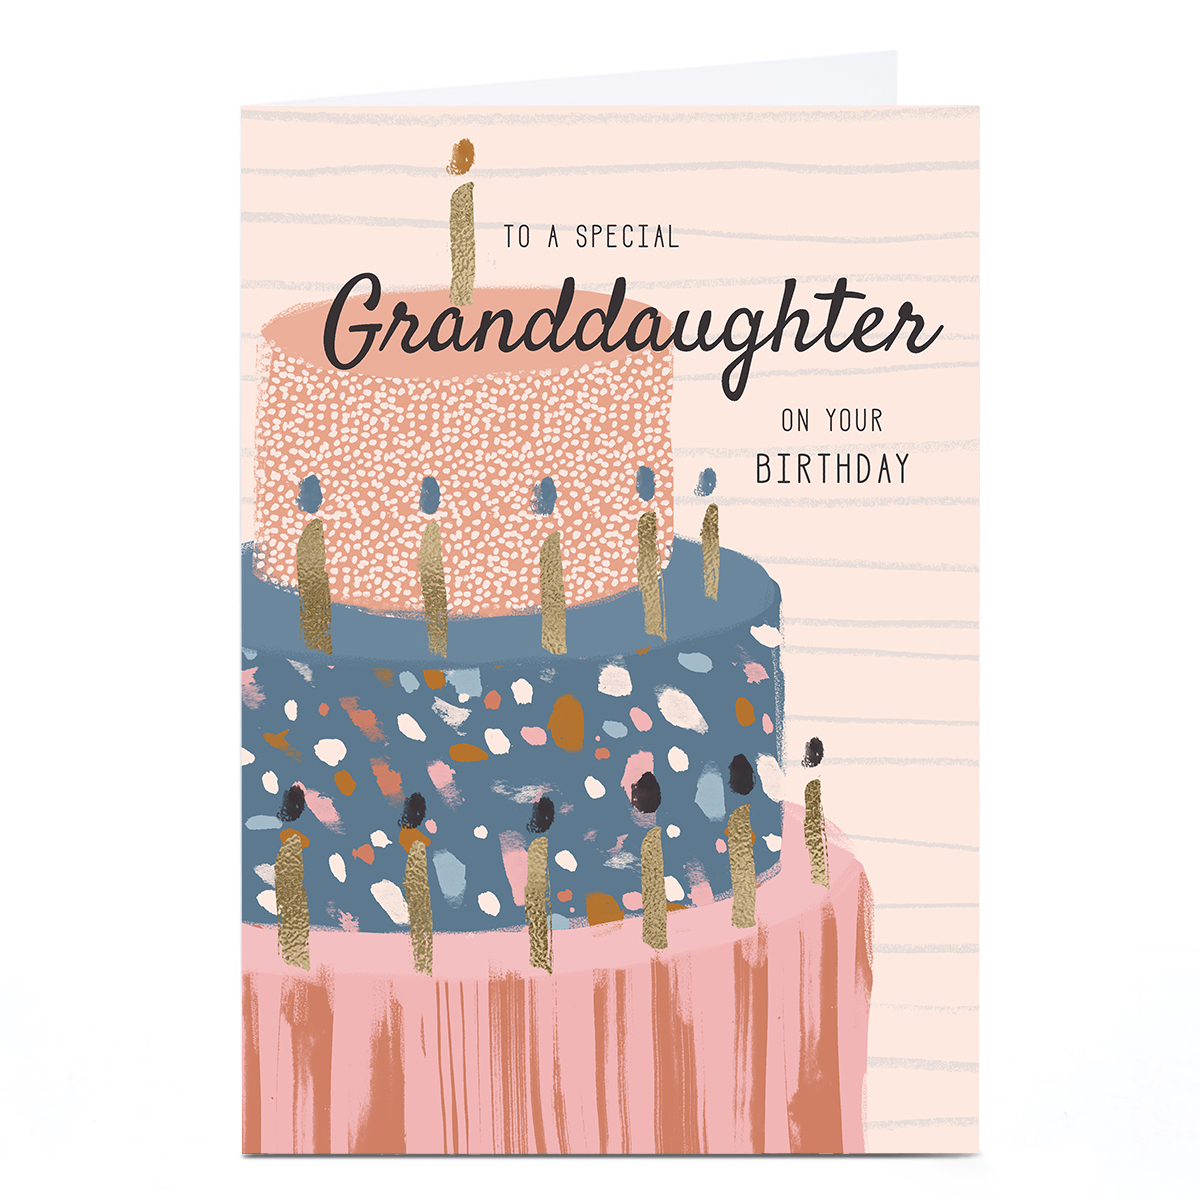 Personalised Rebecca Prinn Birthday Card - Cake & Candles Granddaughter